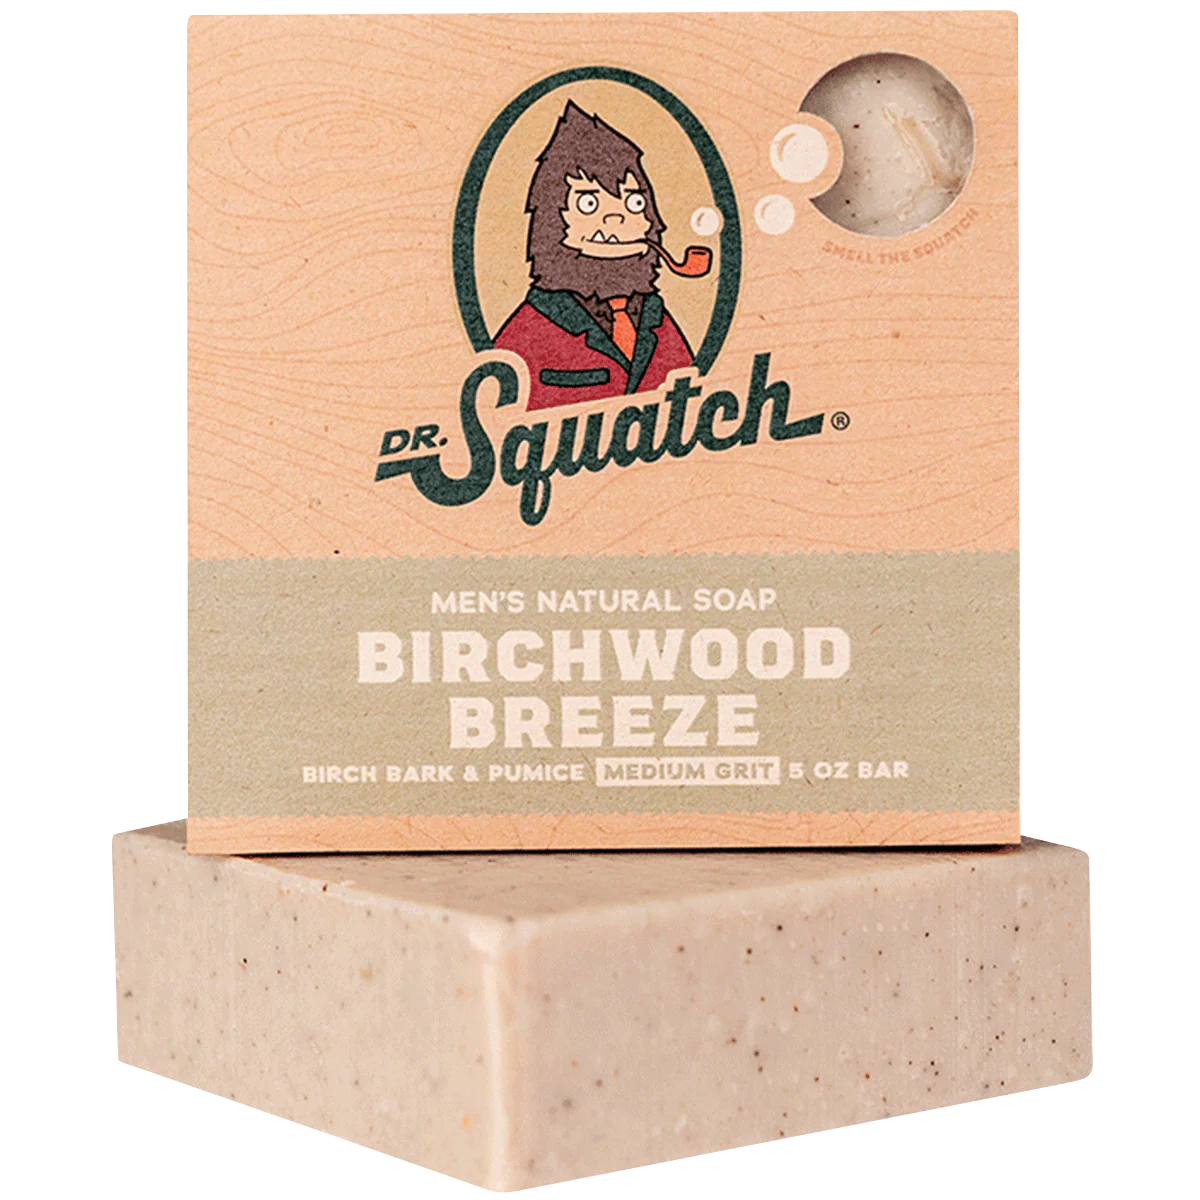 Men's Natural Soap - Birchwood Breeze